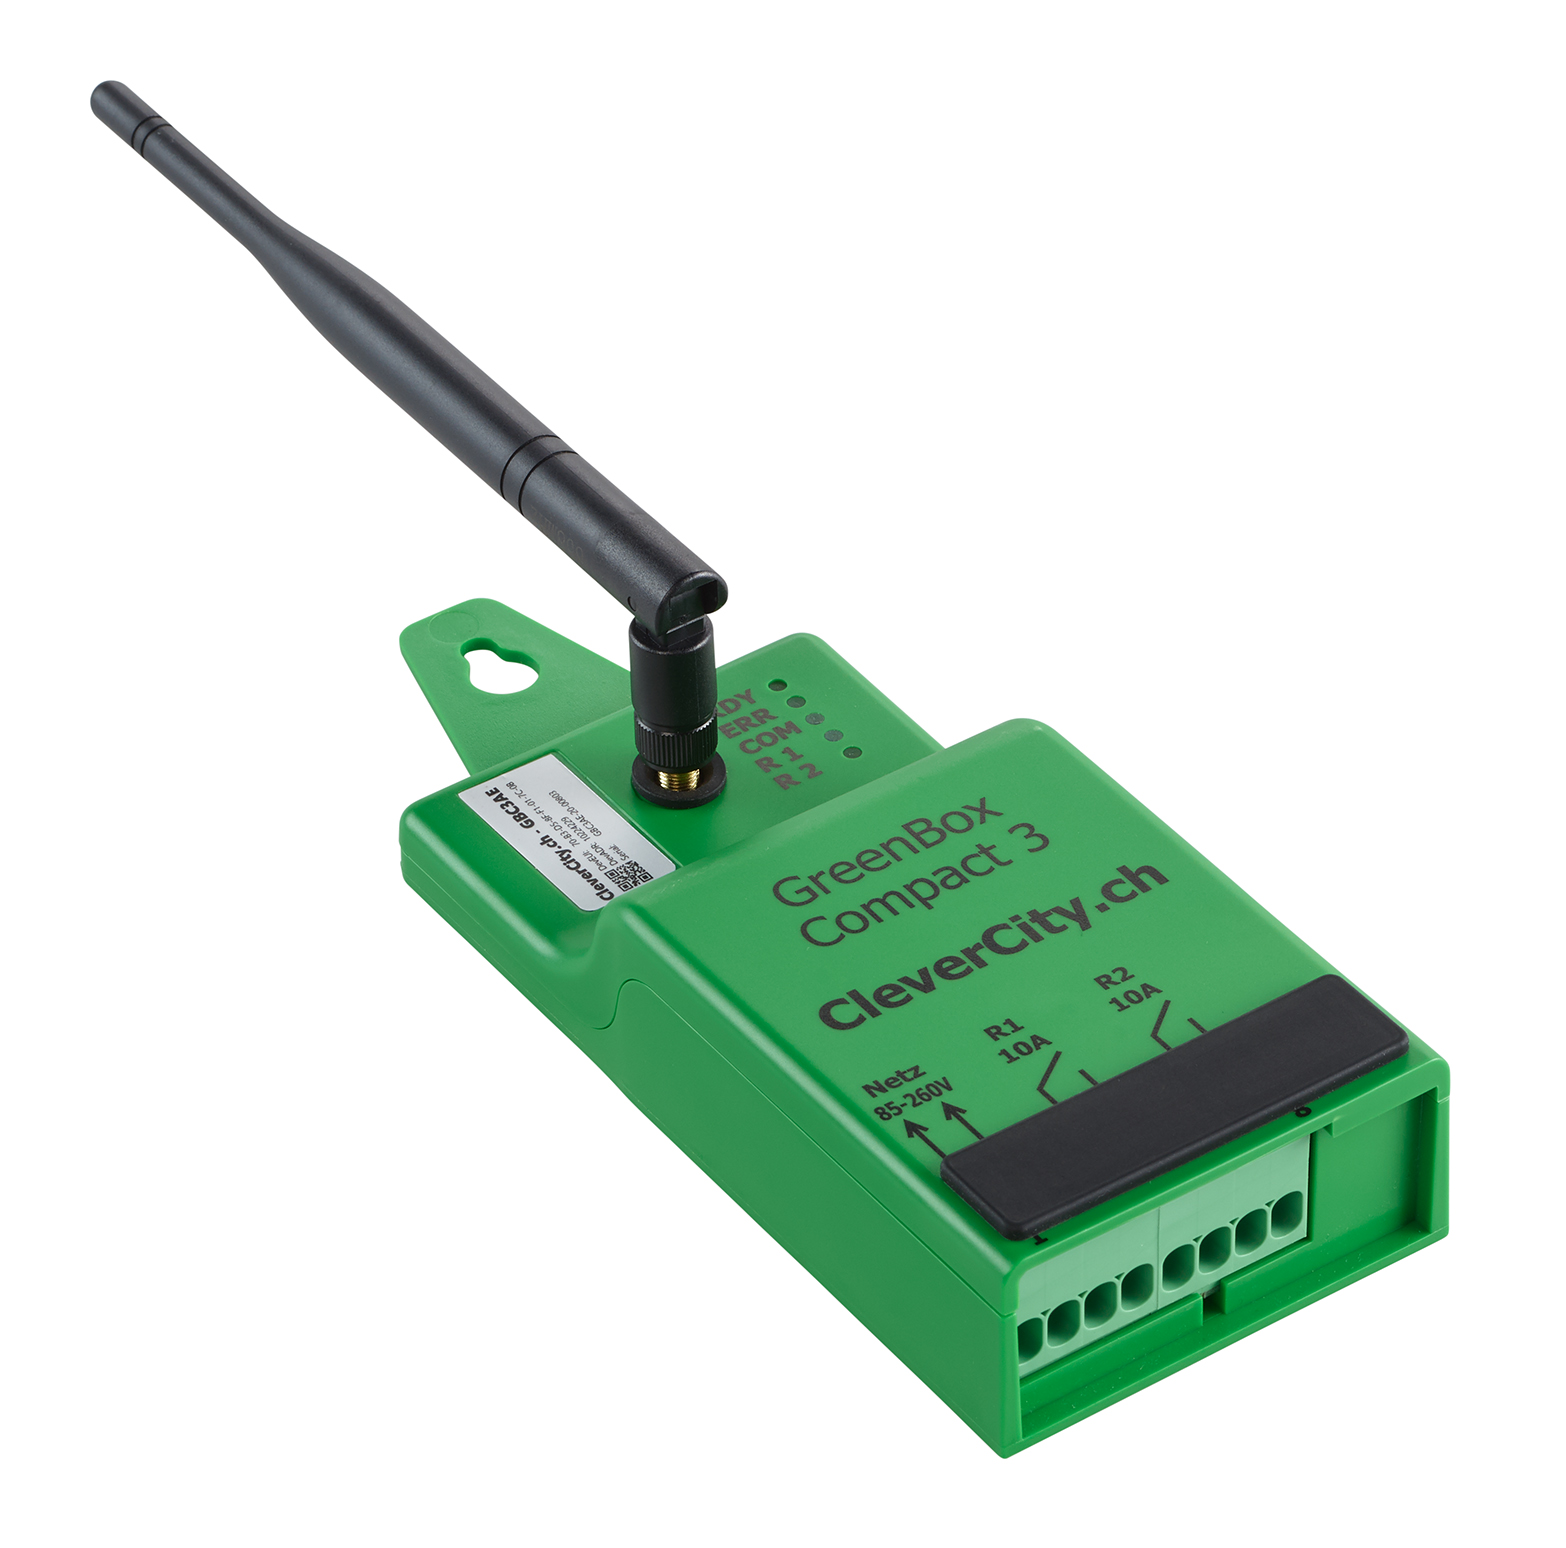 CleverCity Greenbox Compact 3 mit Antenne (nicht im Standard-Lieferumfang)